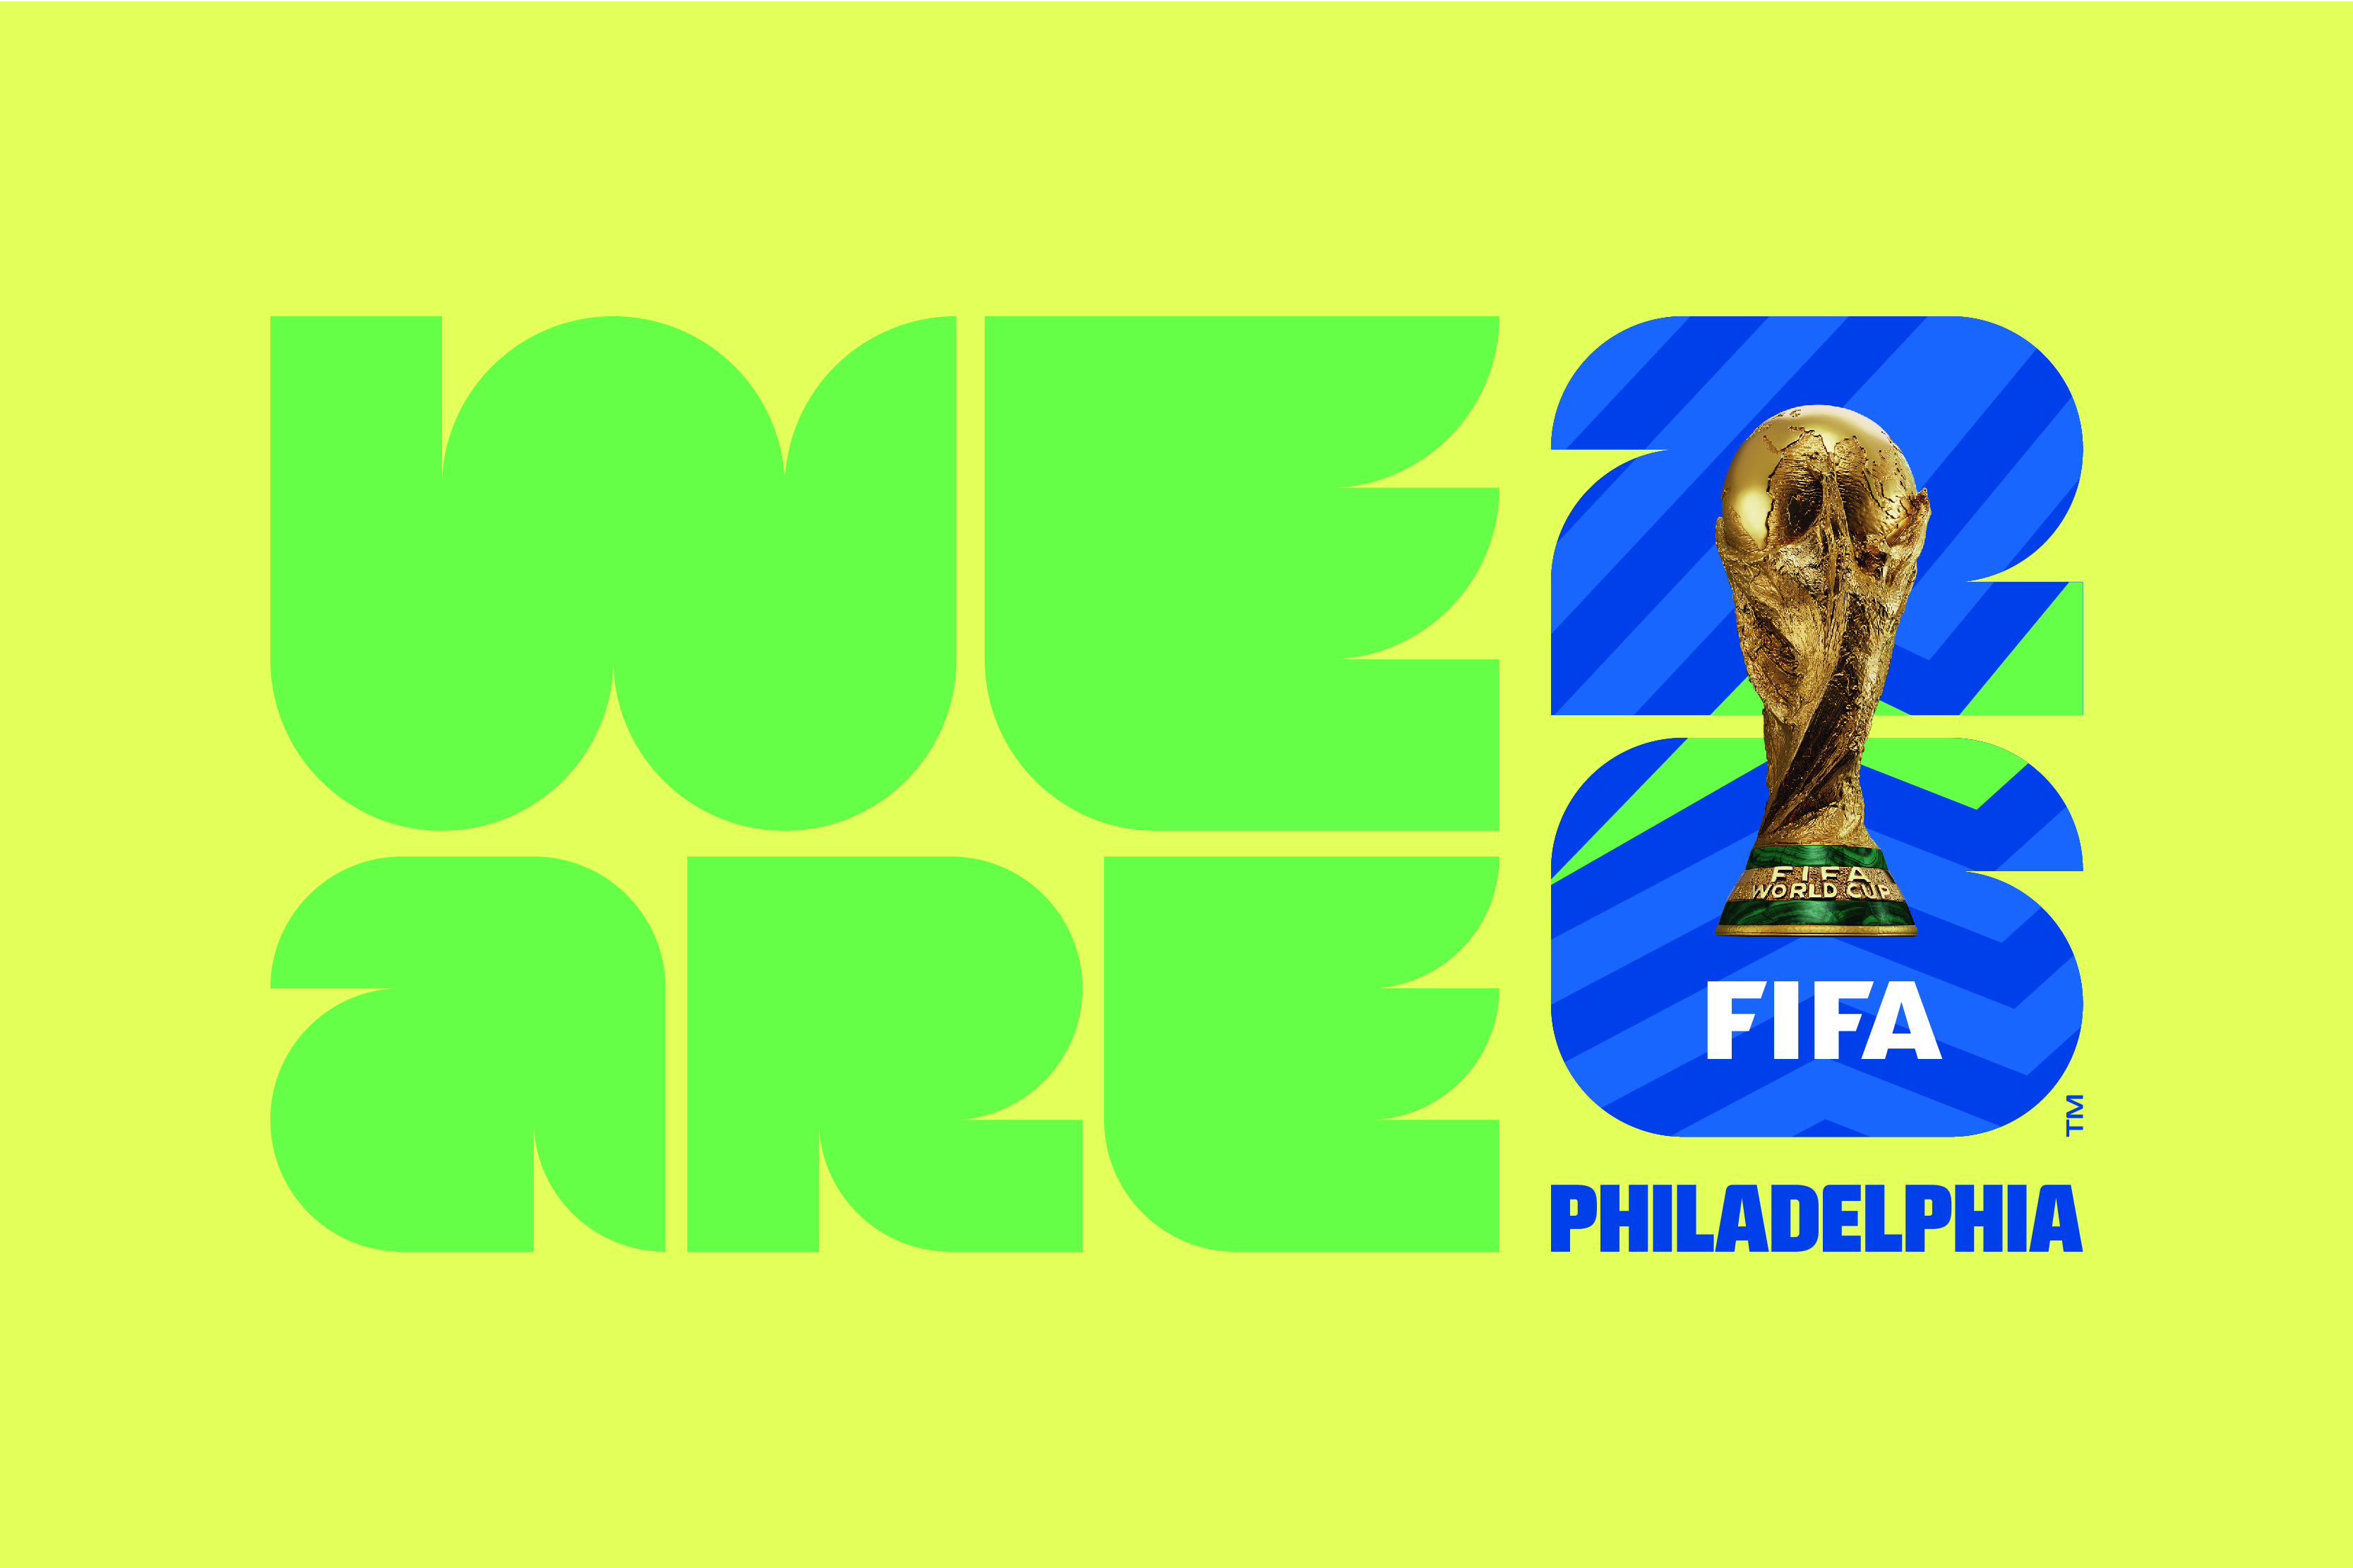 2026 world cup logo